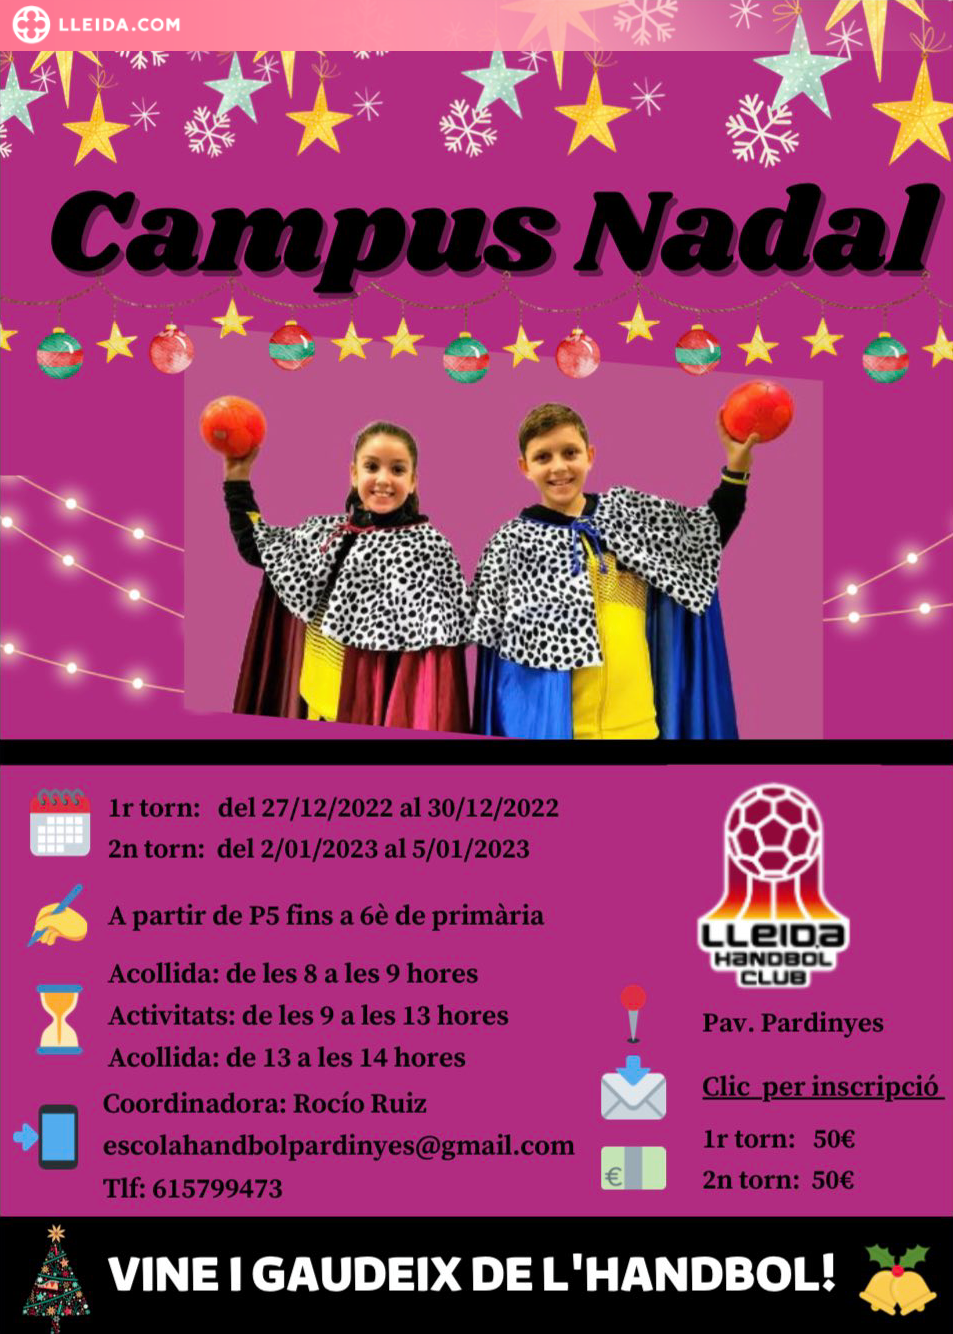 LLEIDA.COM - Campus de Nadal Lleida Handbol Club